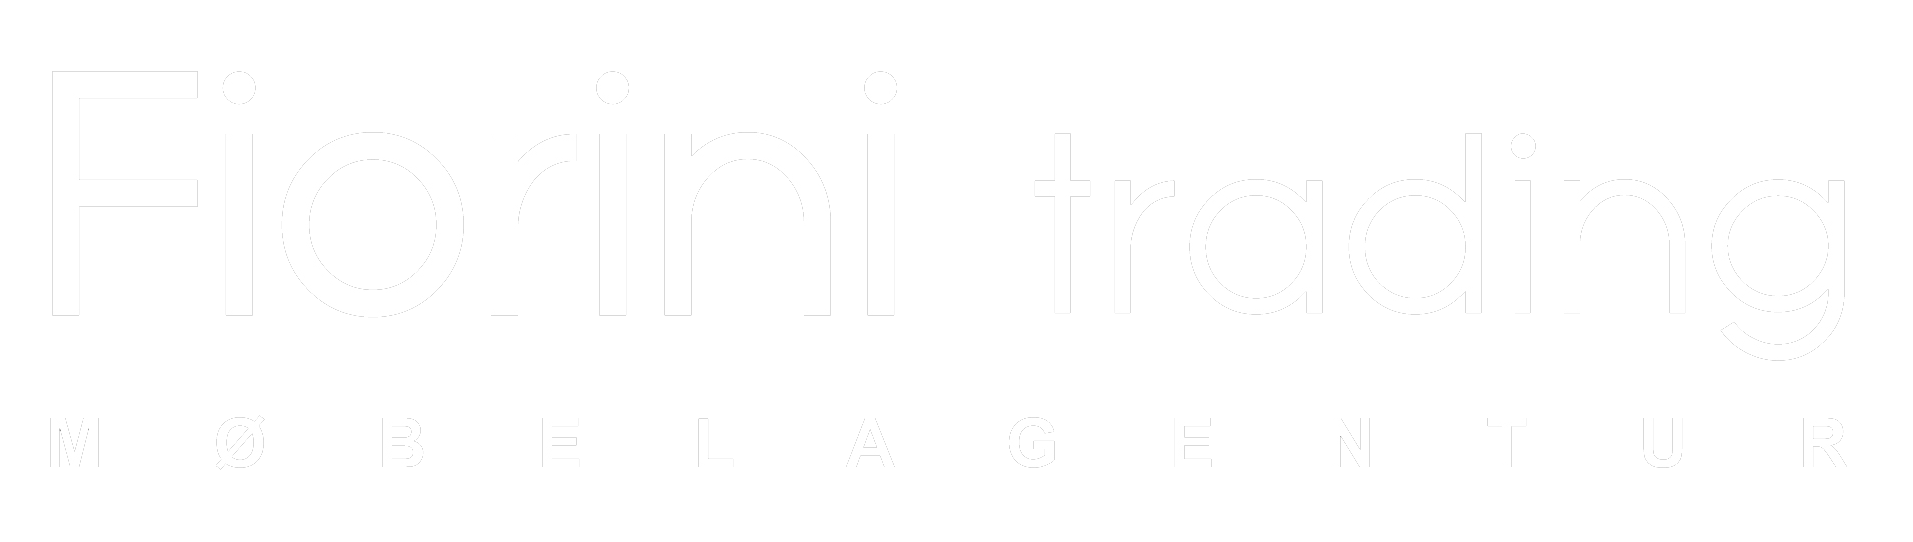 Fiorini Trading logo